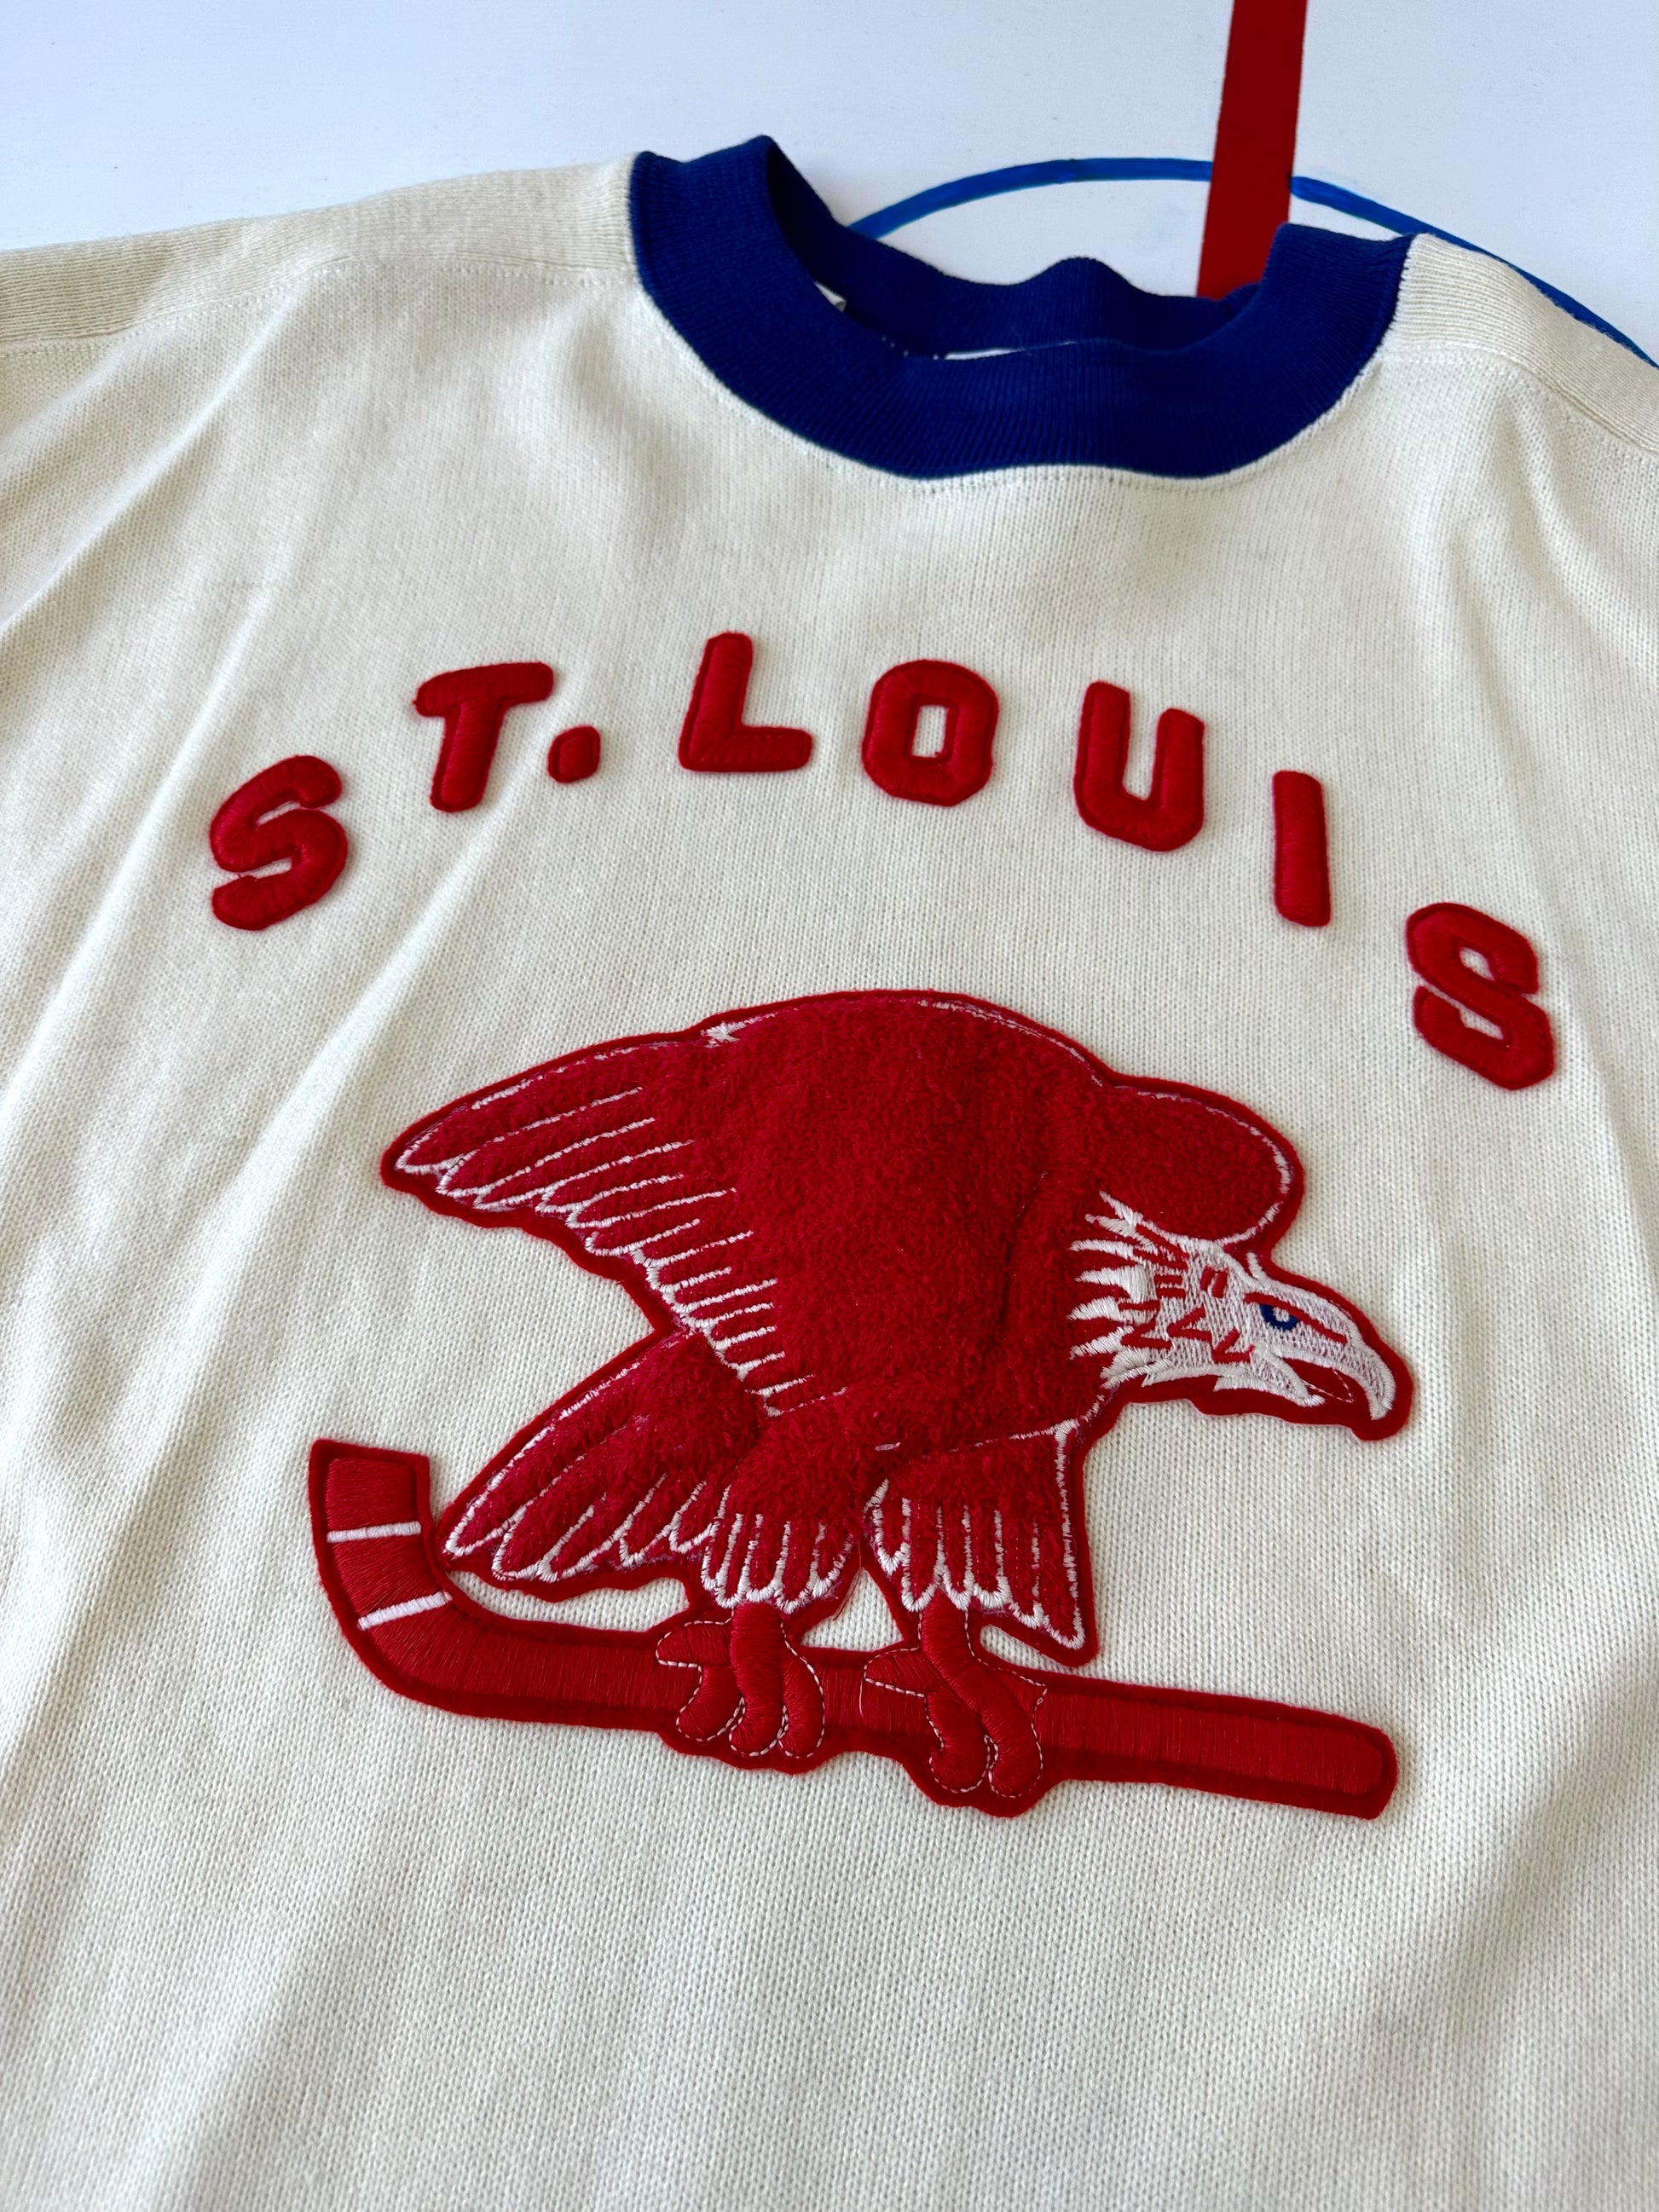 St. Louis Eagles Hockey T-Shirt